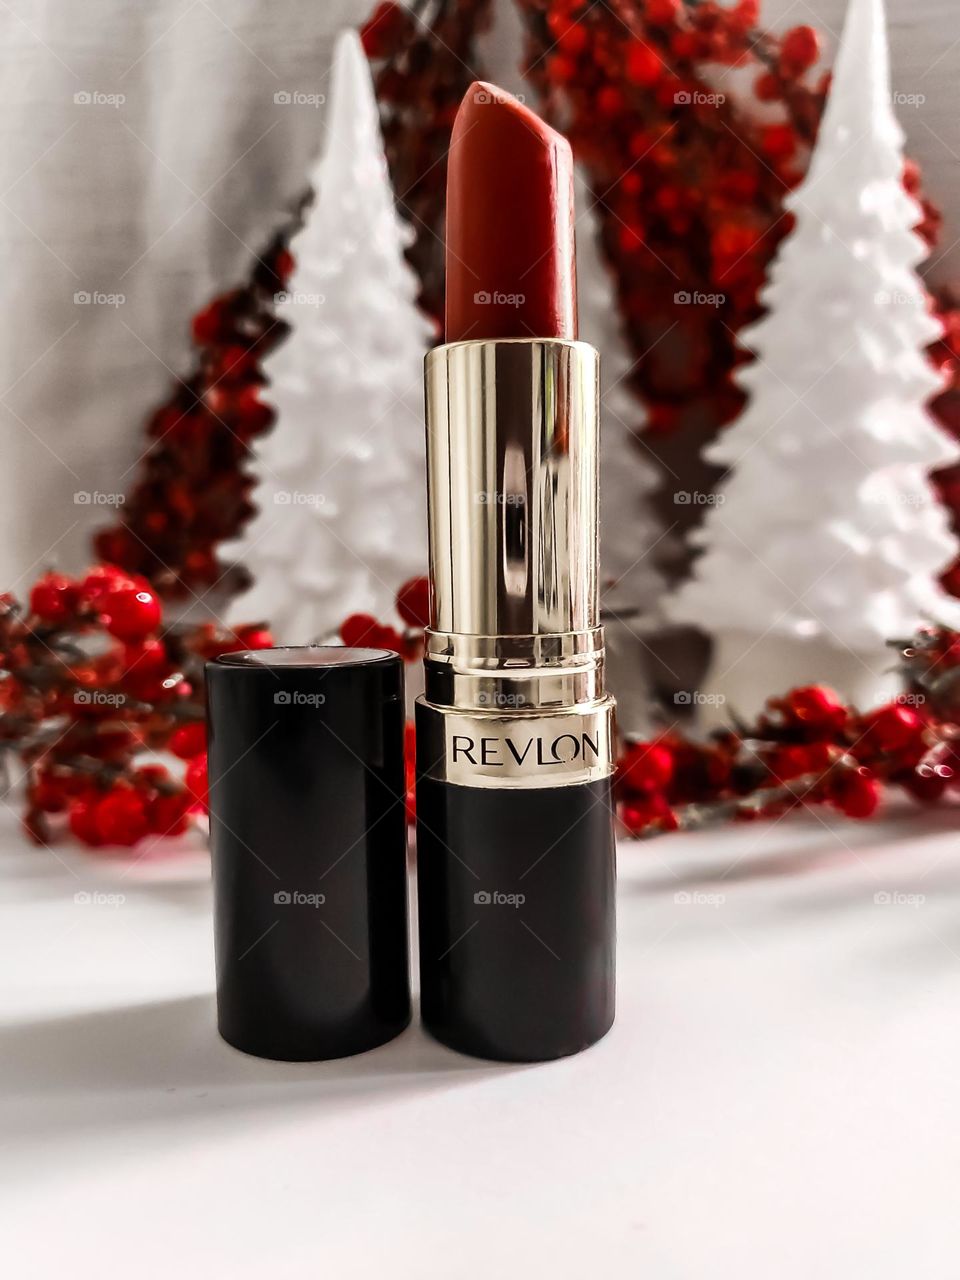 Revlon lipstick holiday theme